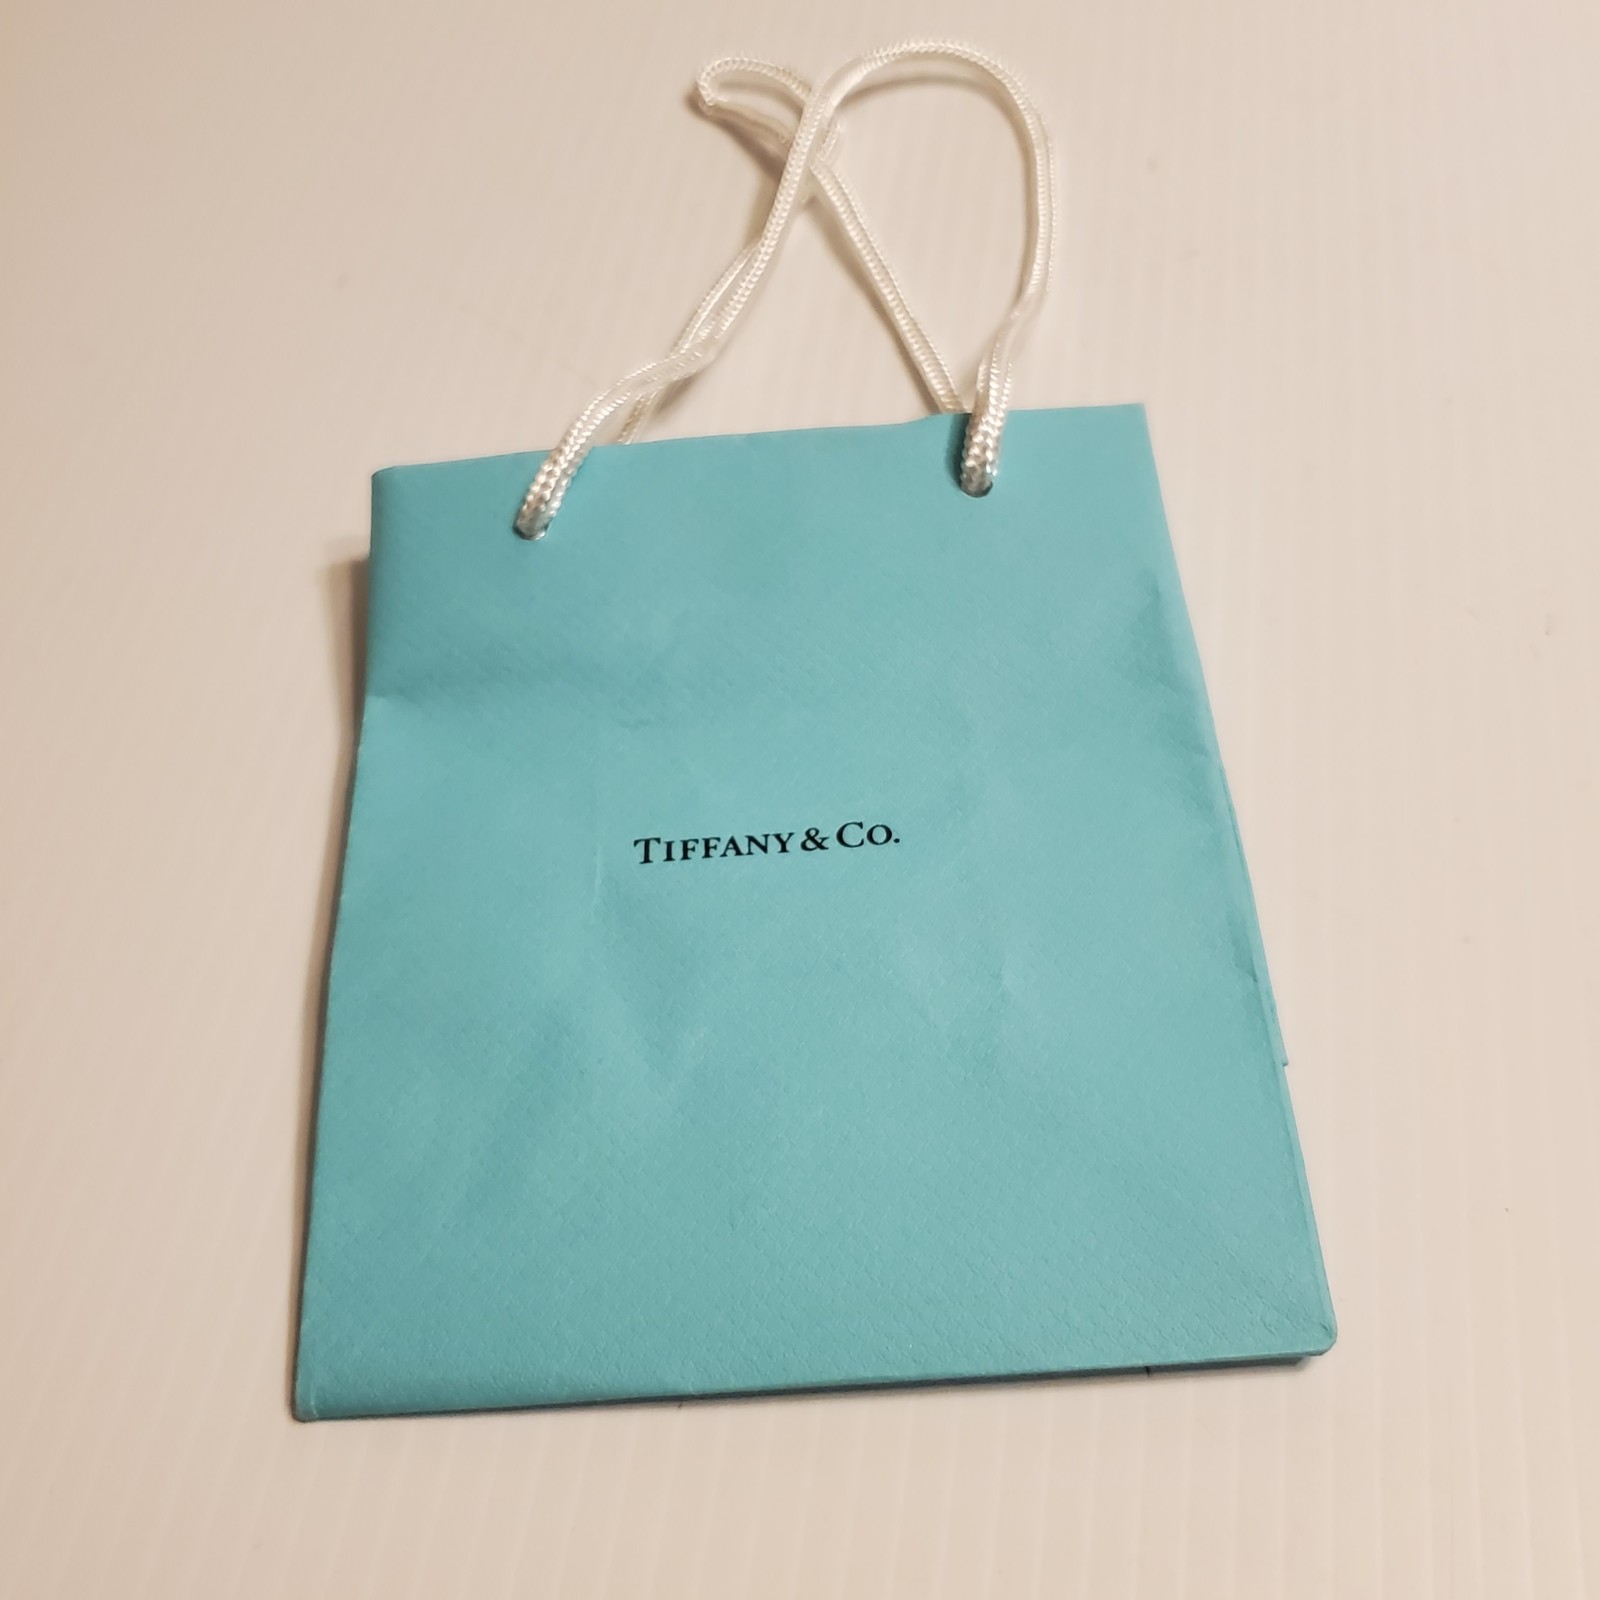 Tiffany & Co paper  gift bag. Very good shape. Teal 6x5x3 Lot 1 - $11.00